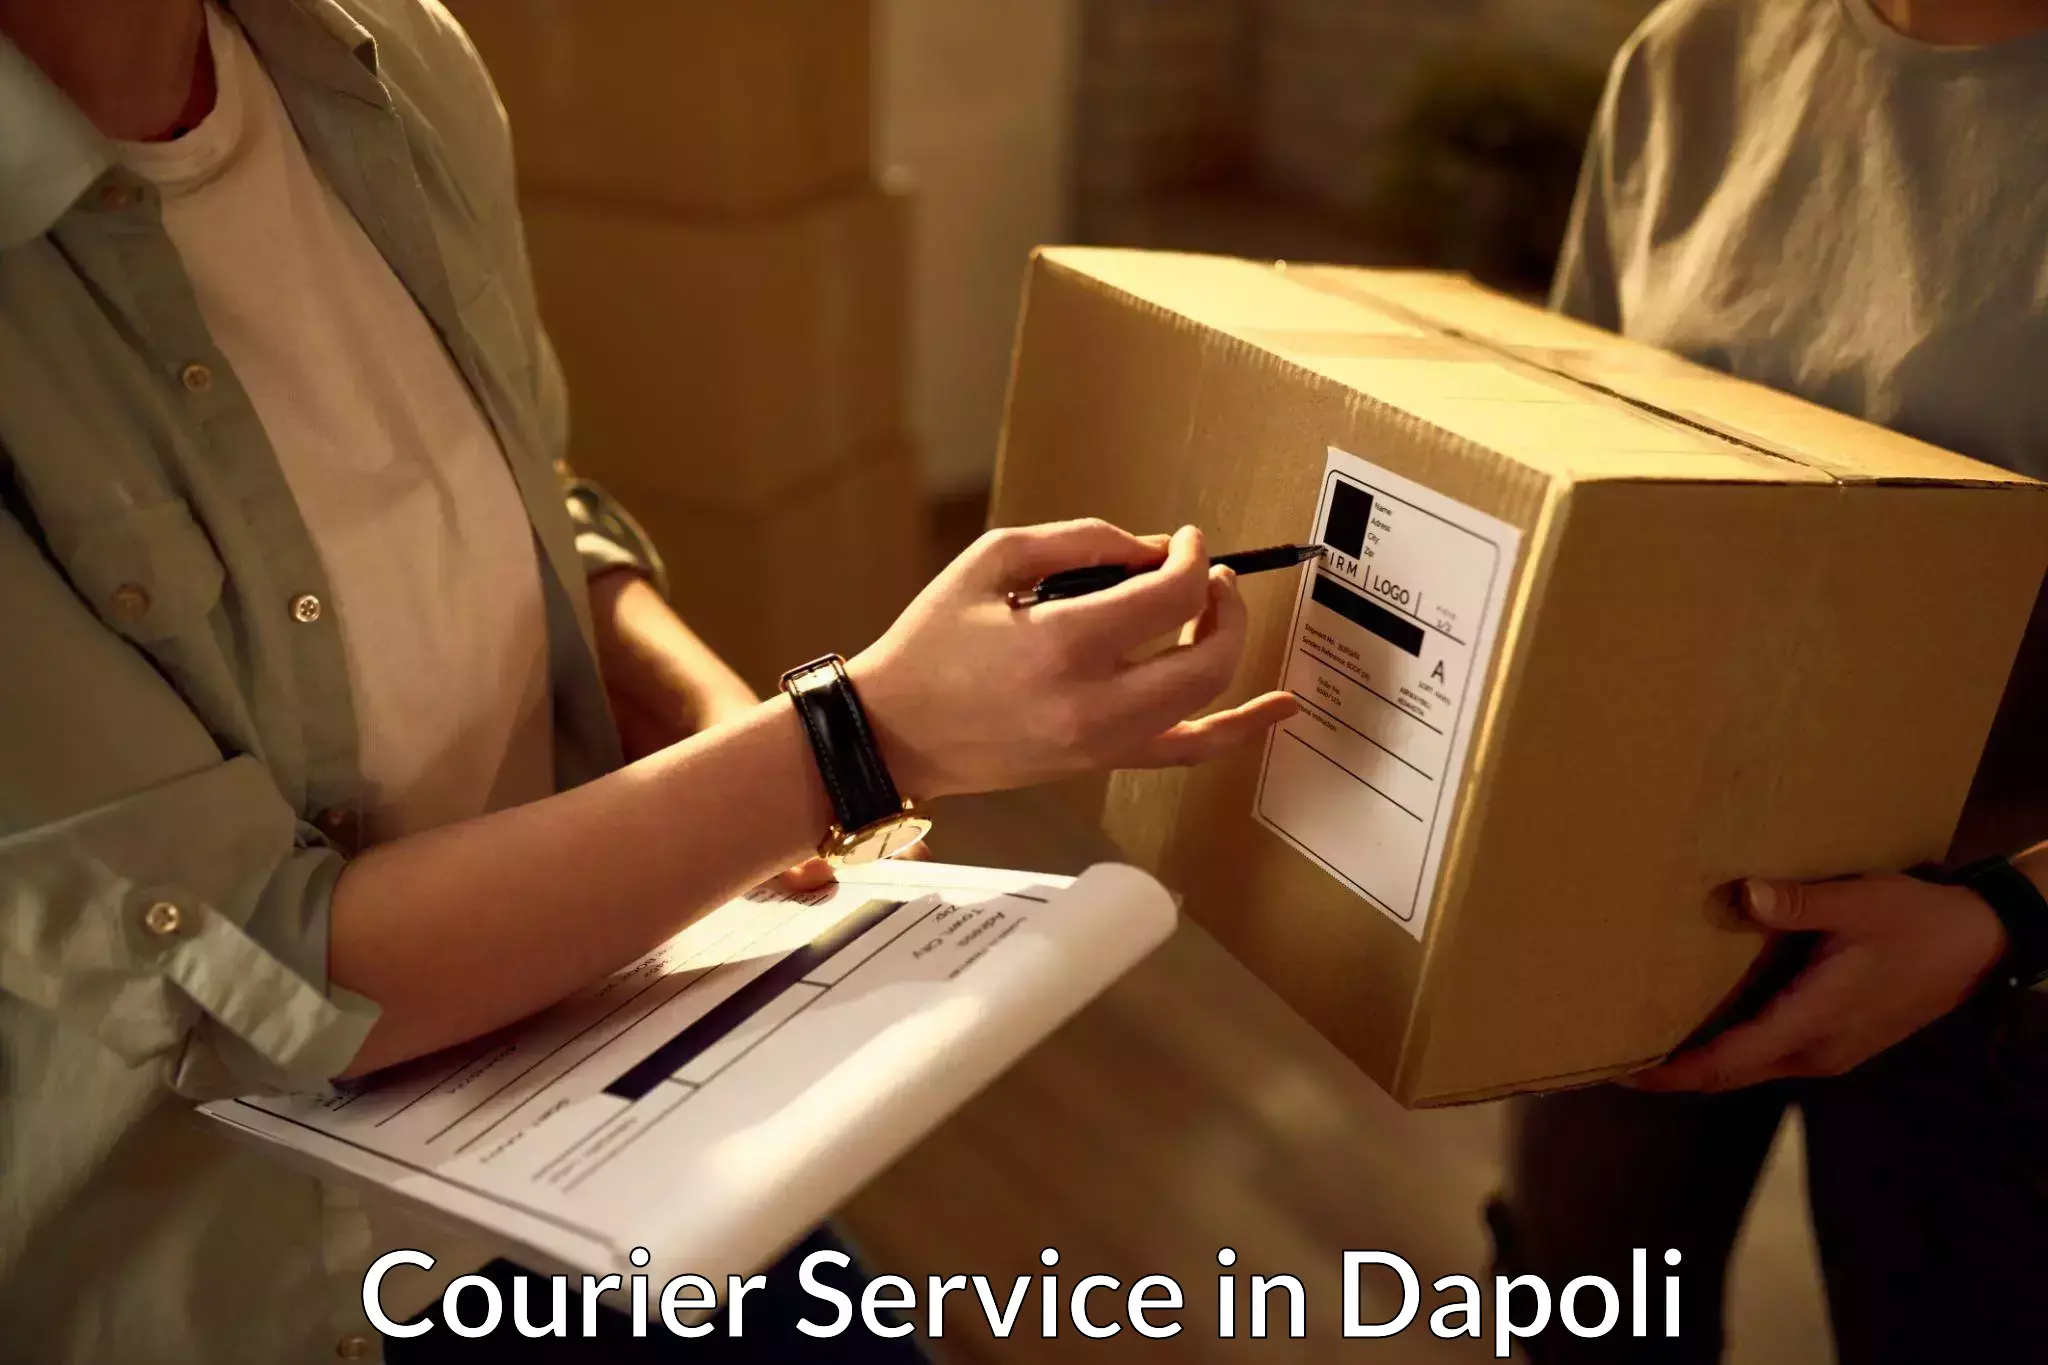 Customer-focused courier in Dapoli